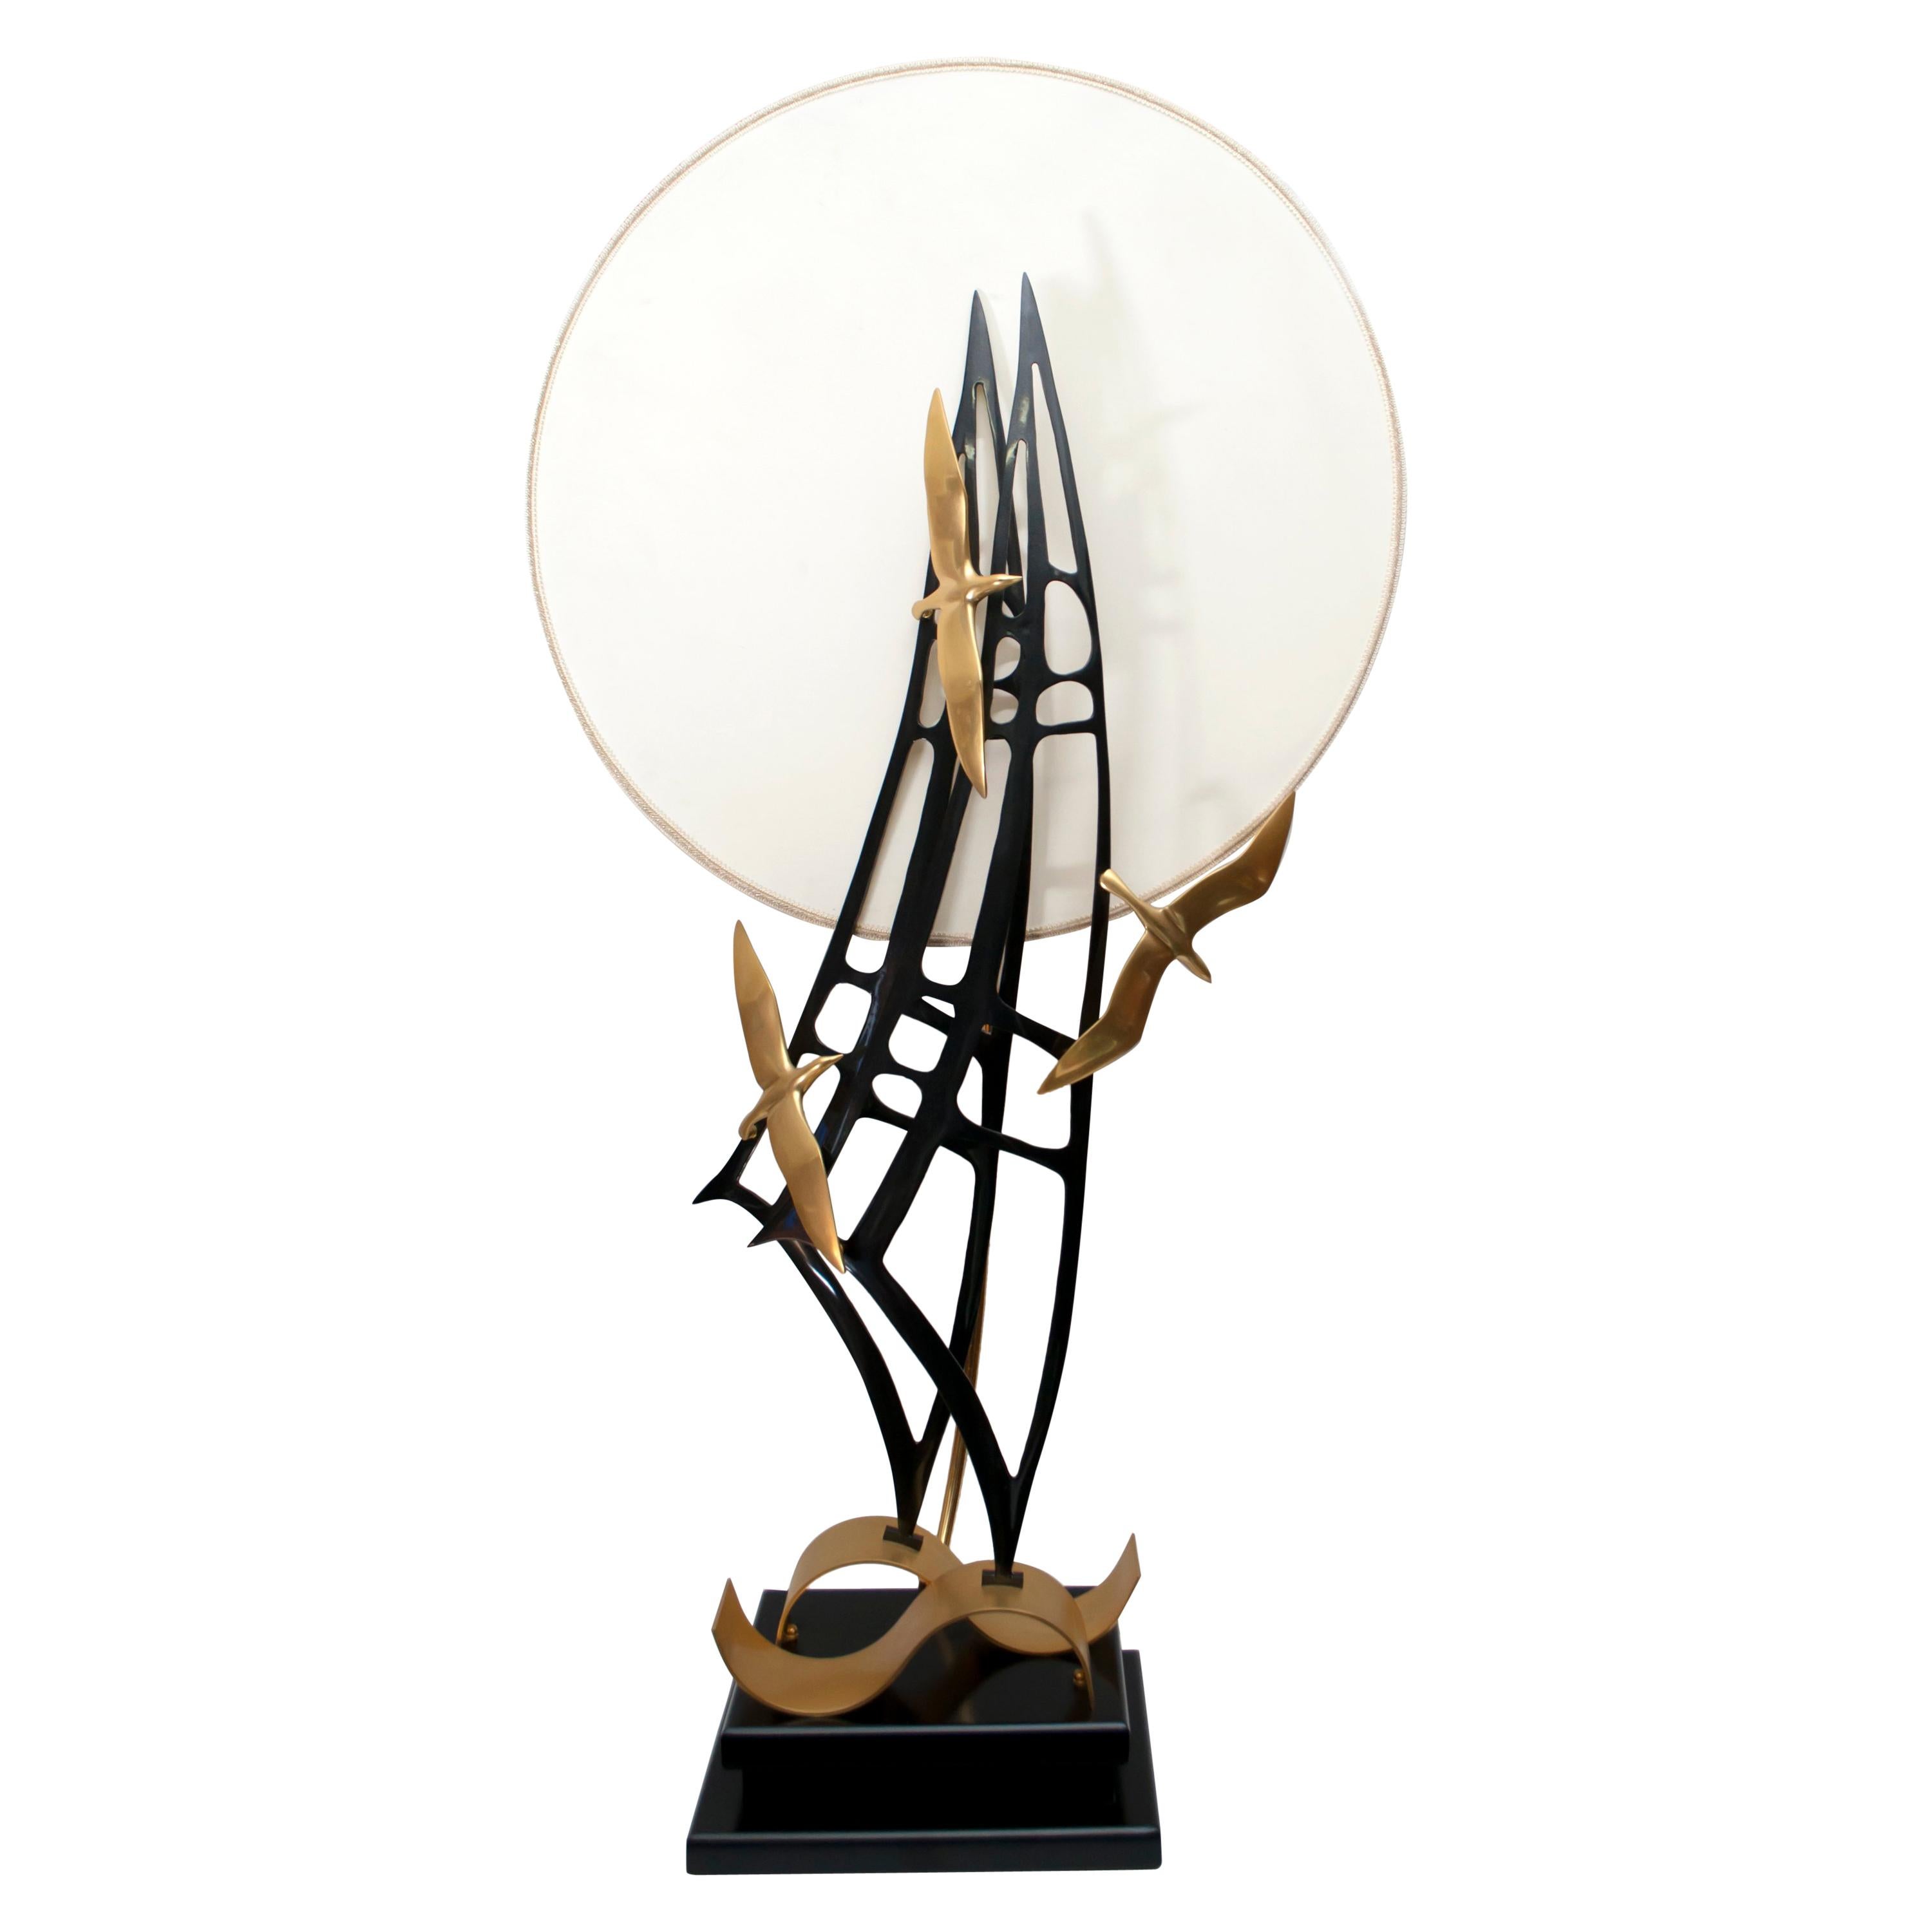 Lanciotto Galeotti Midcentury Gold-Plated Lamp Italian by L'Originale, 1970s